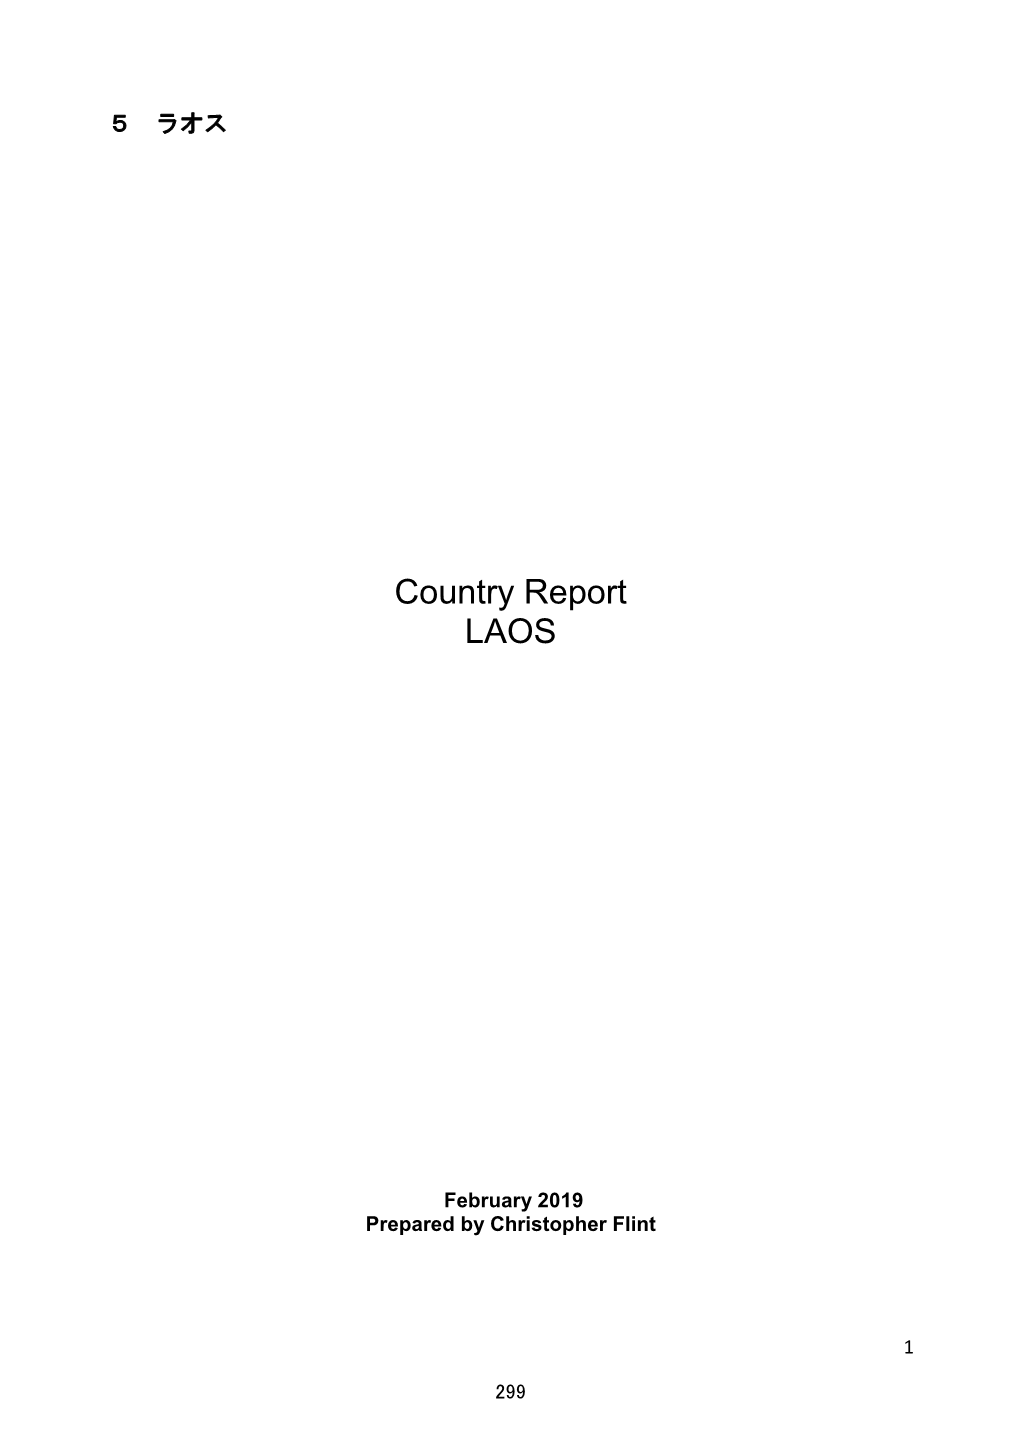 Country Report LAOS